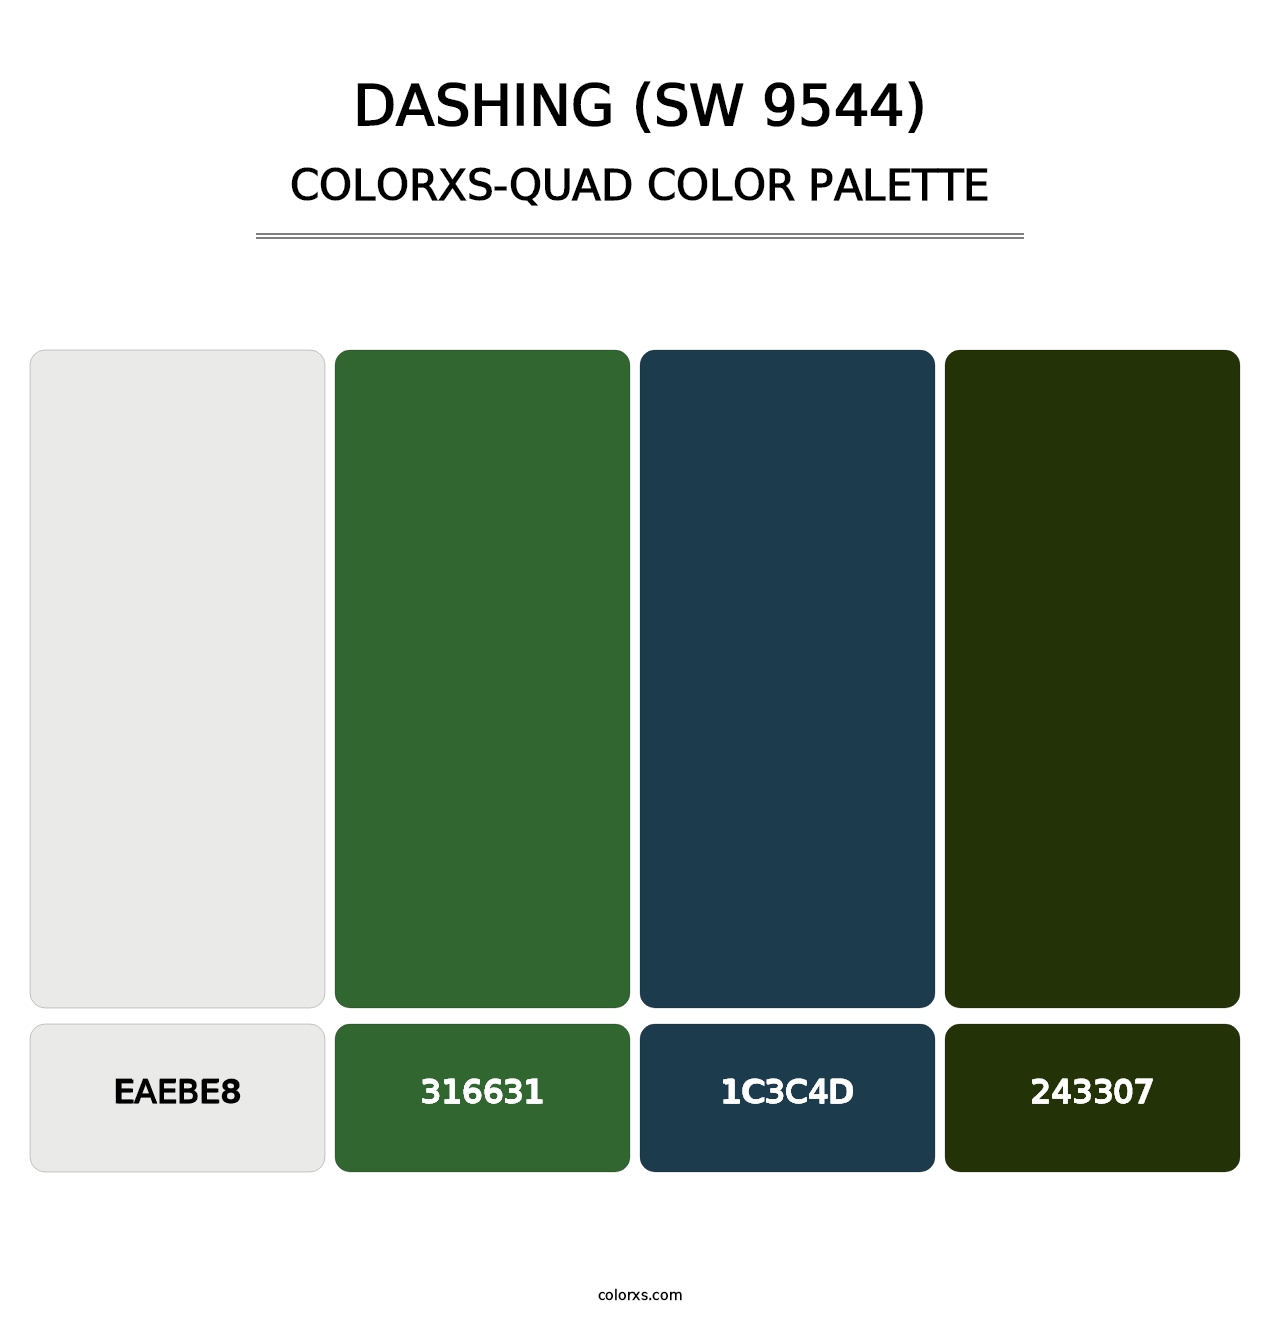 Dashing (SW 9544) - Colorxs Quad Palette